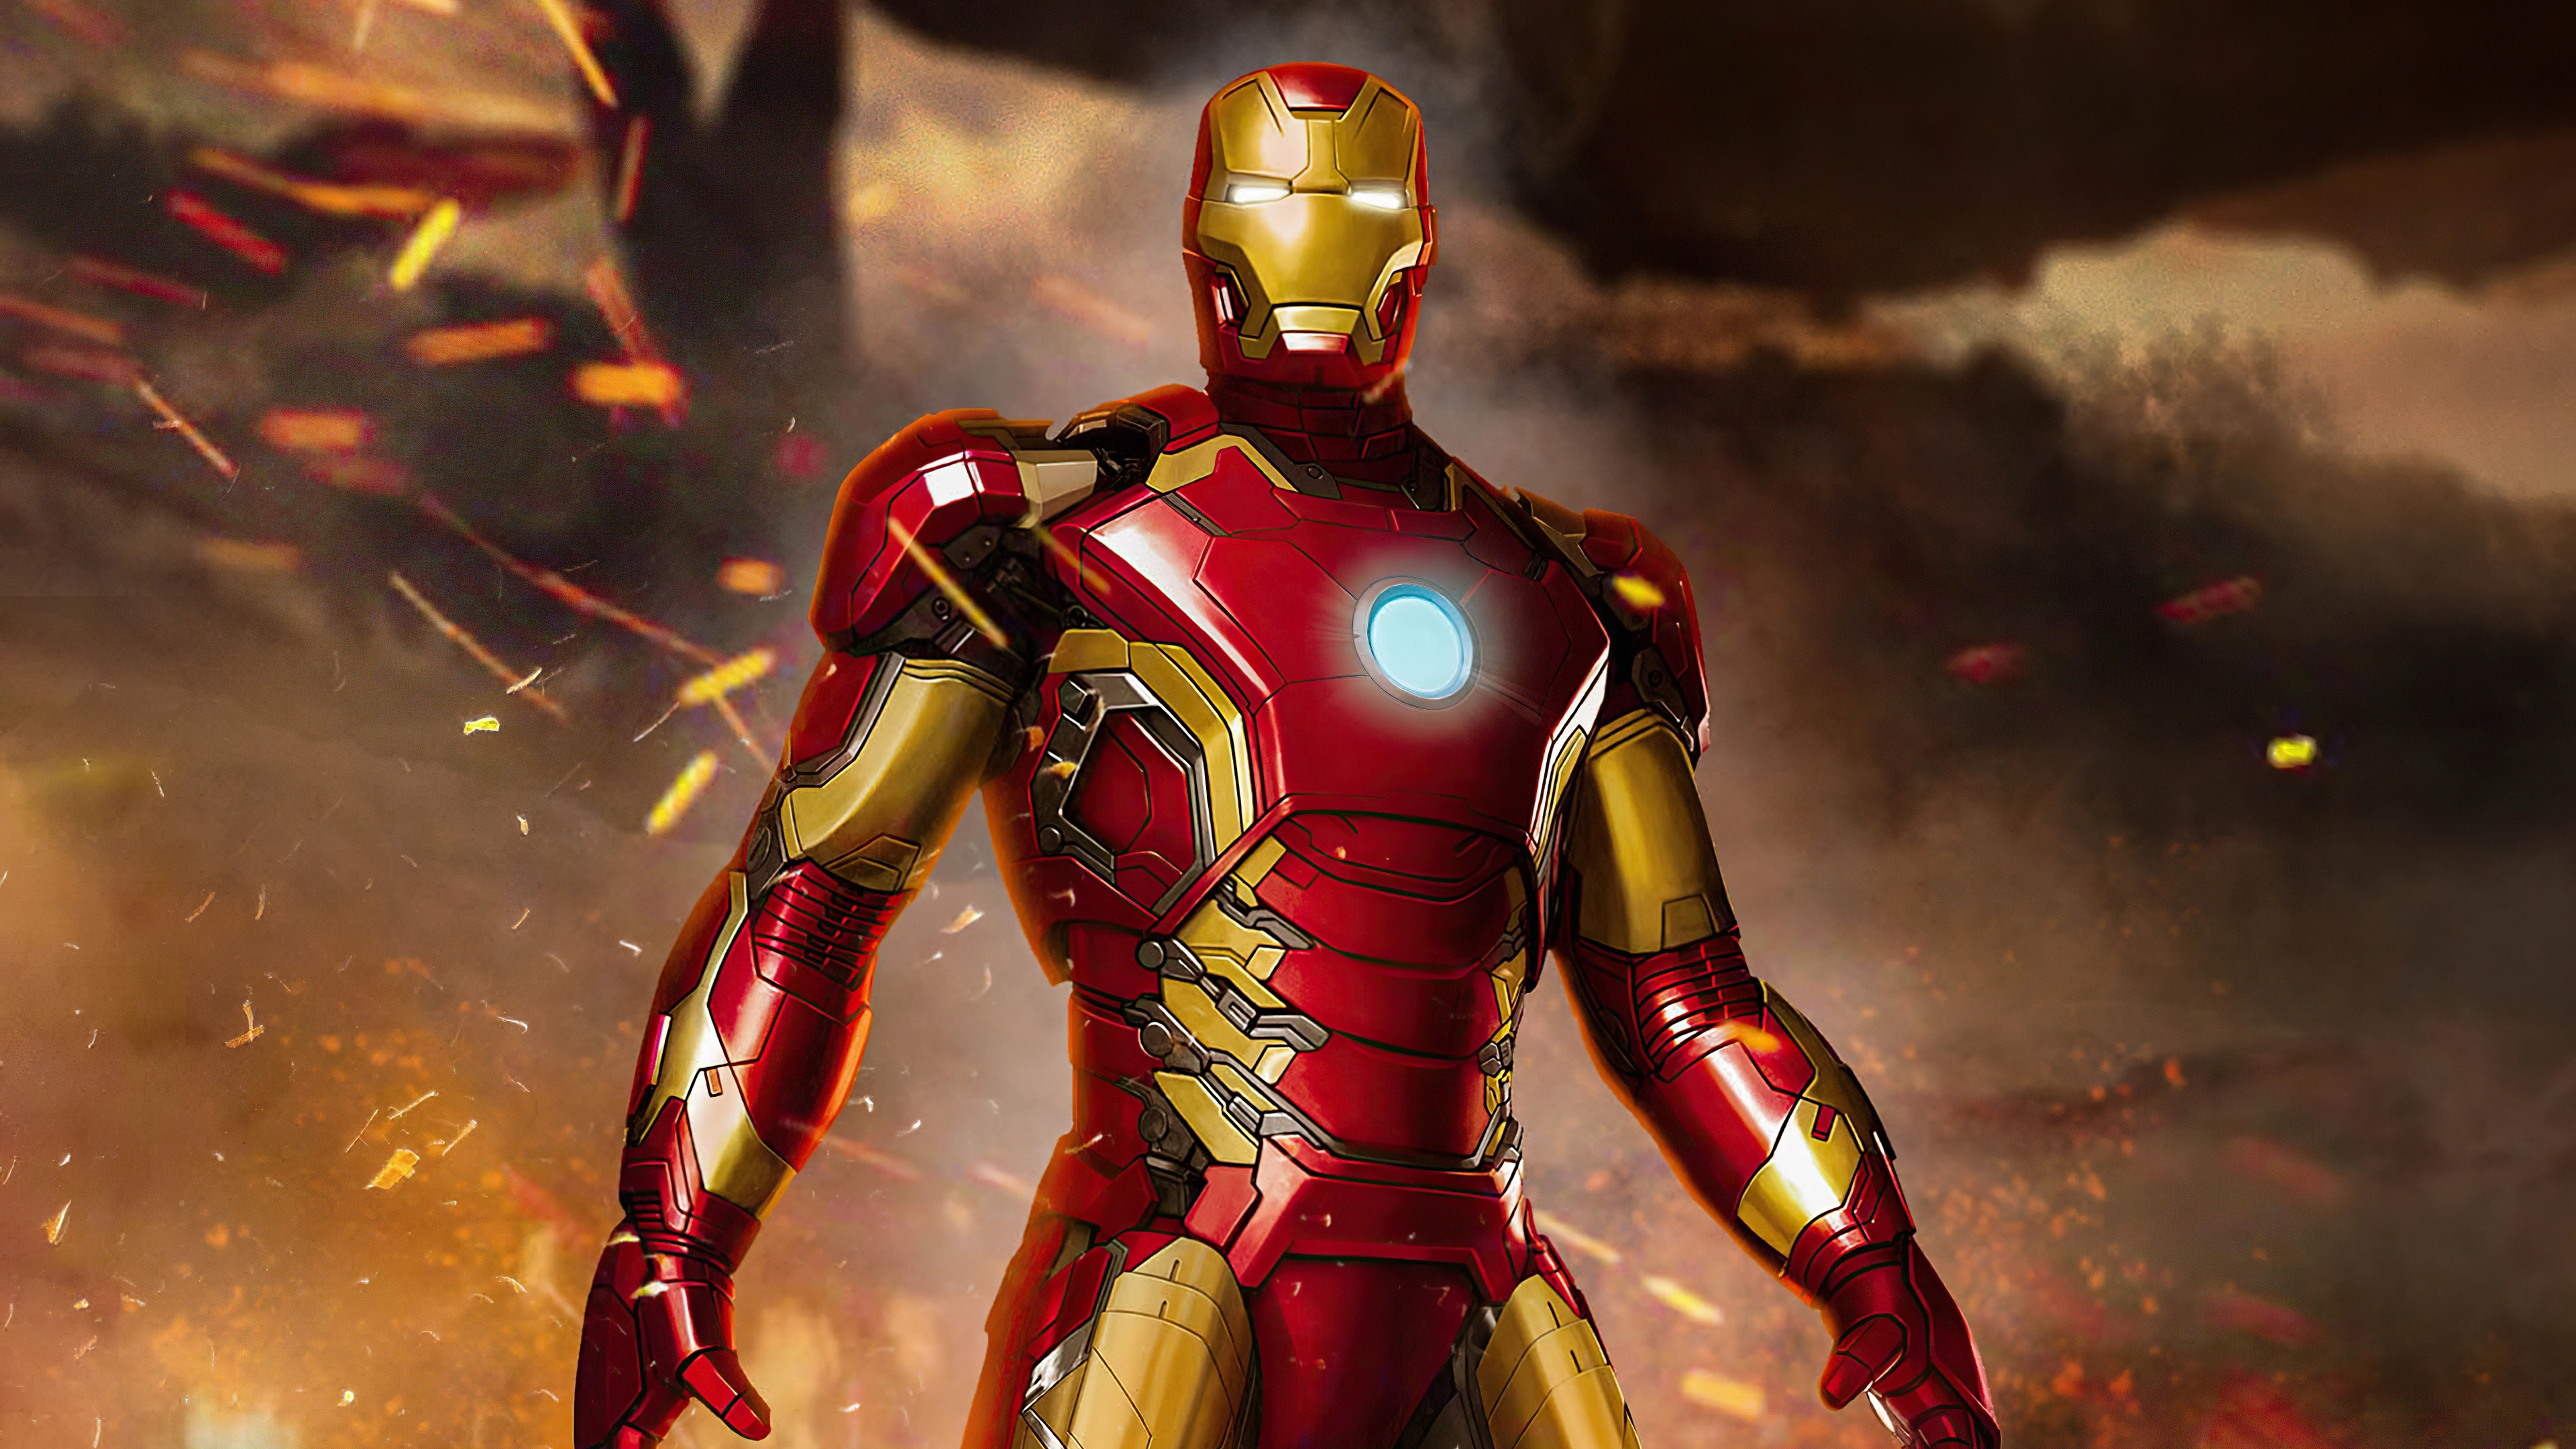 Iron Man, Tony Stark, High-definition wallpaper, Iron Man suit, 3840x2160 4K Desktop